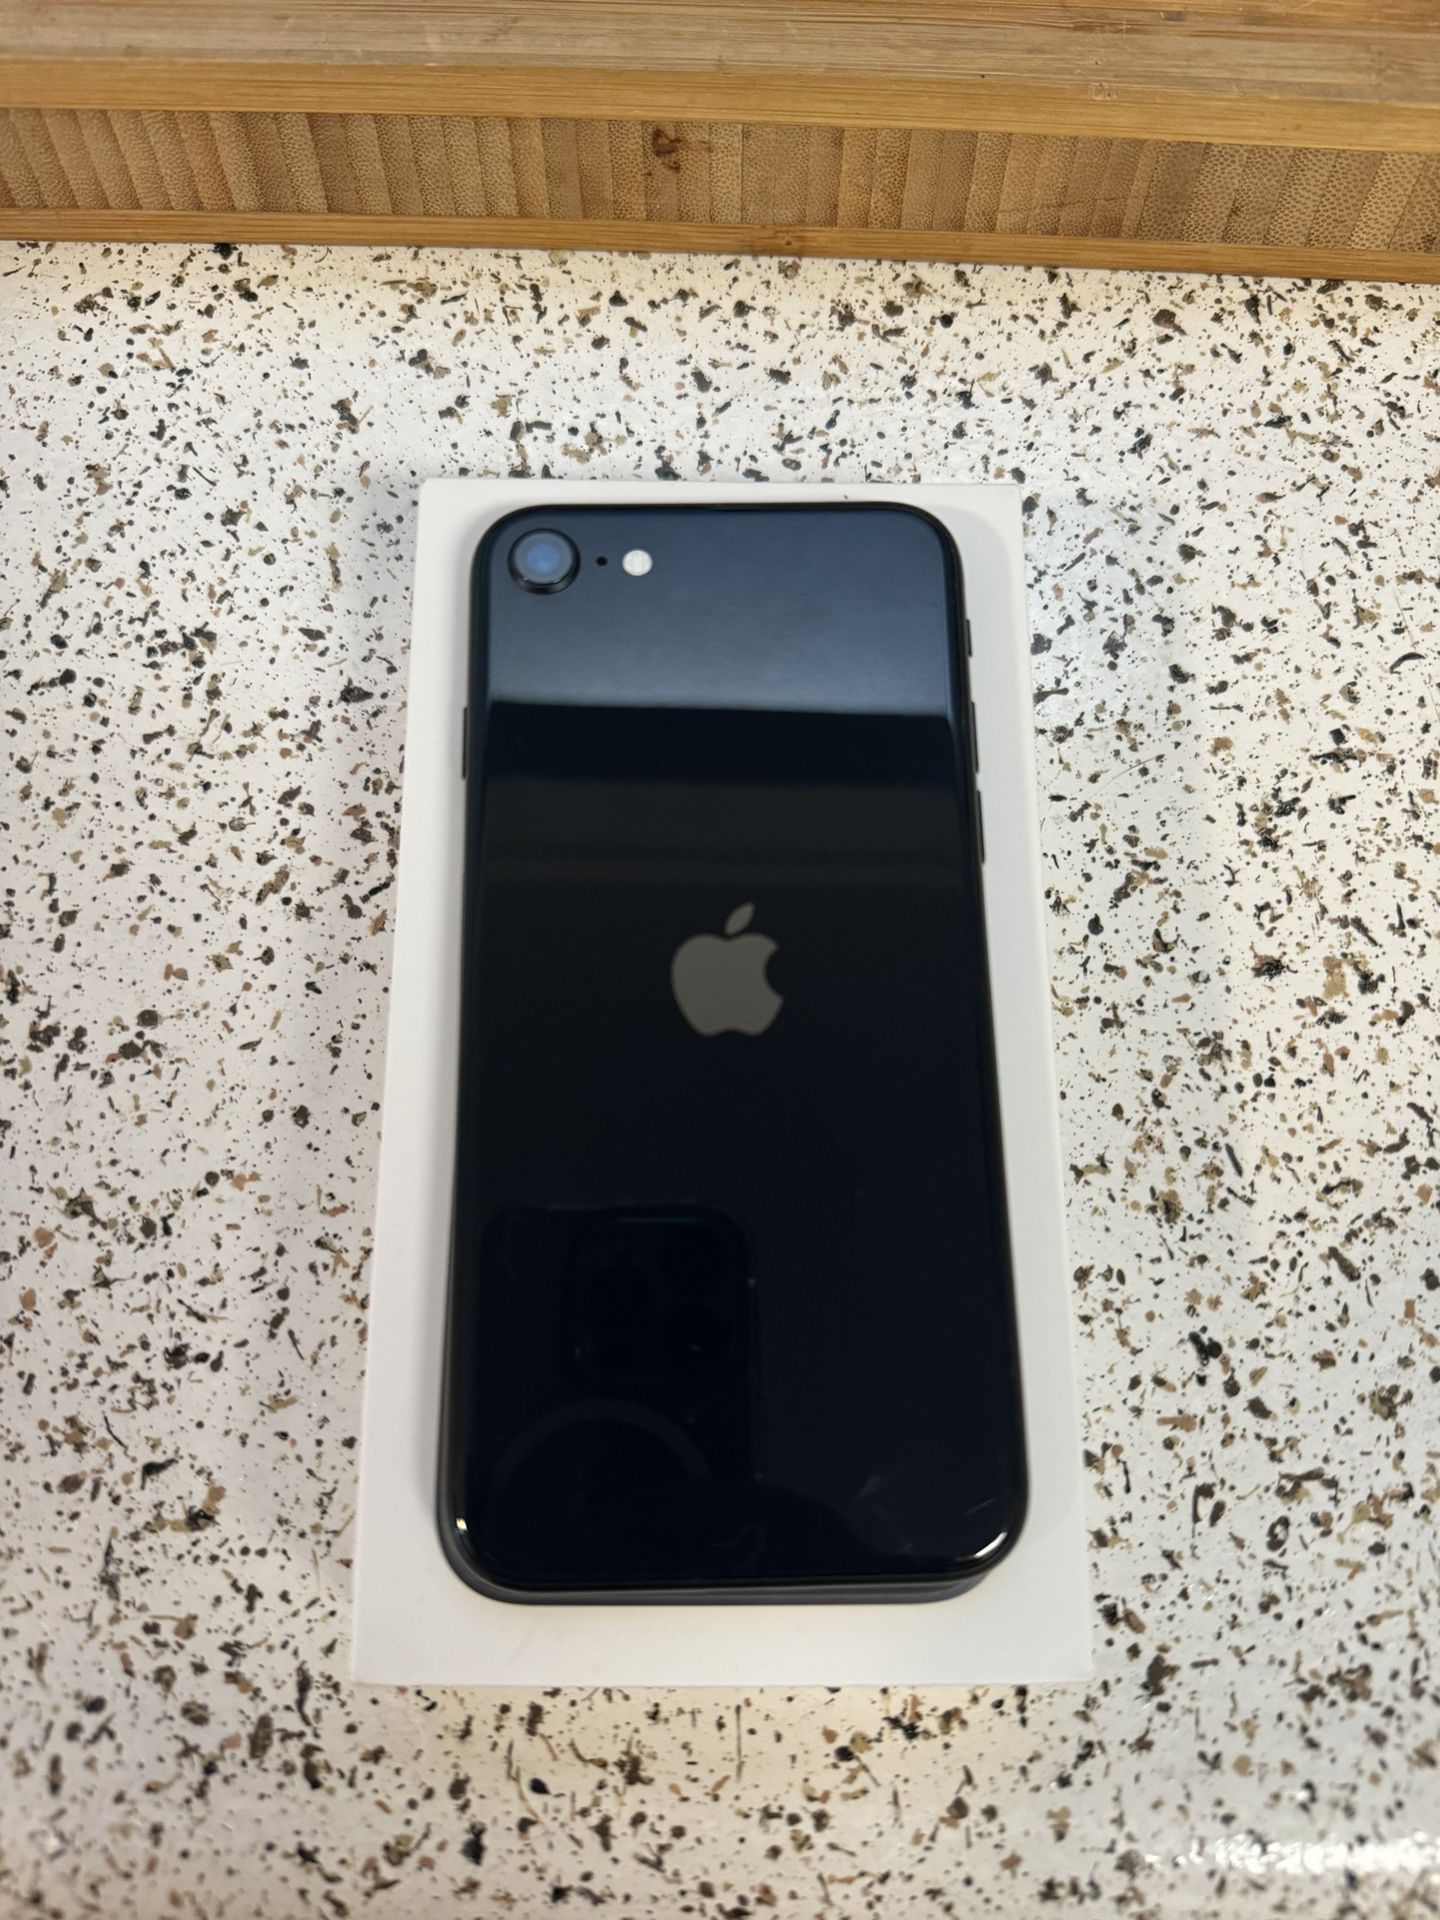 iPhone SE (2022) - Unlocked - 64GB